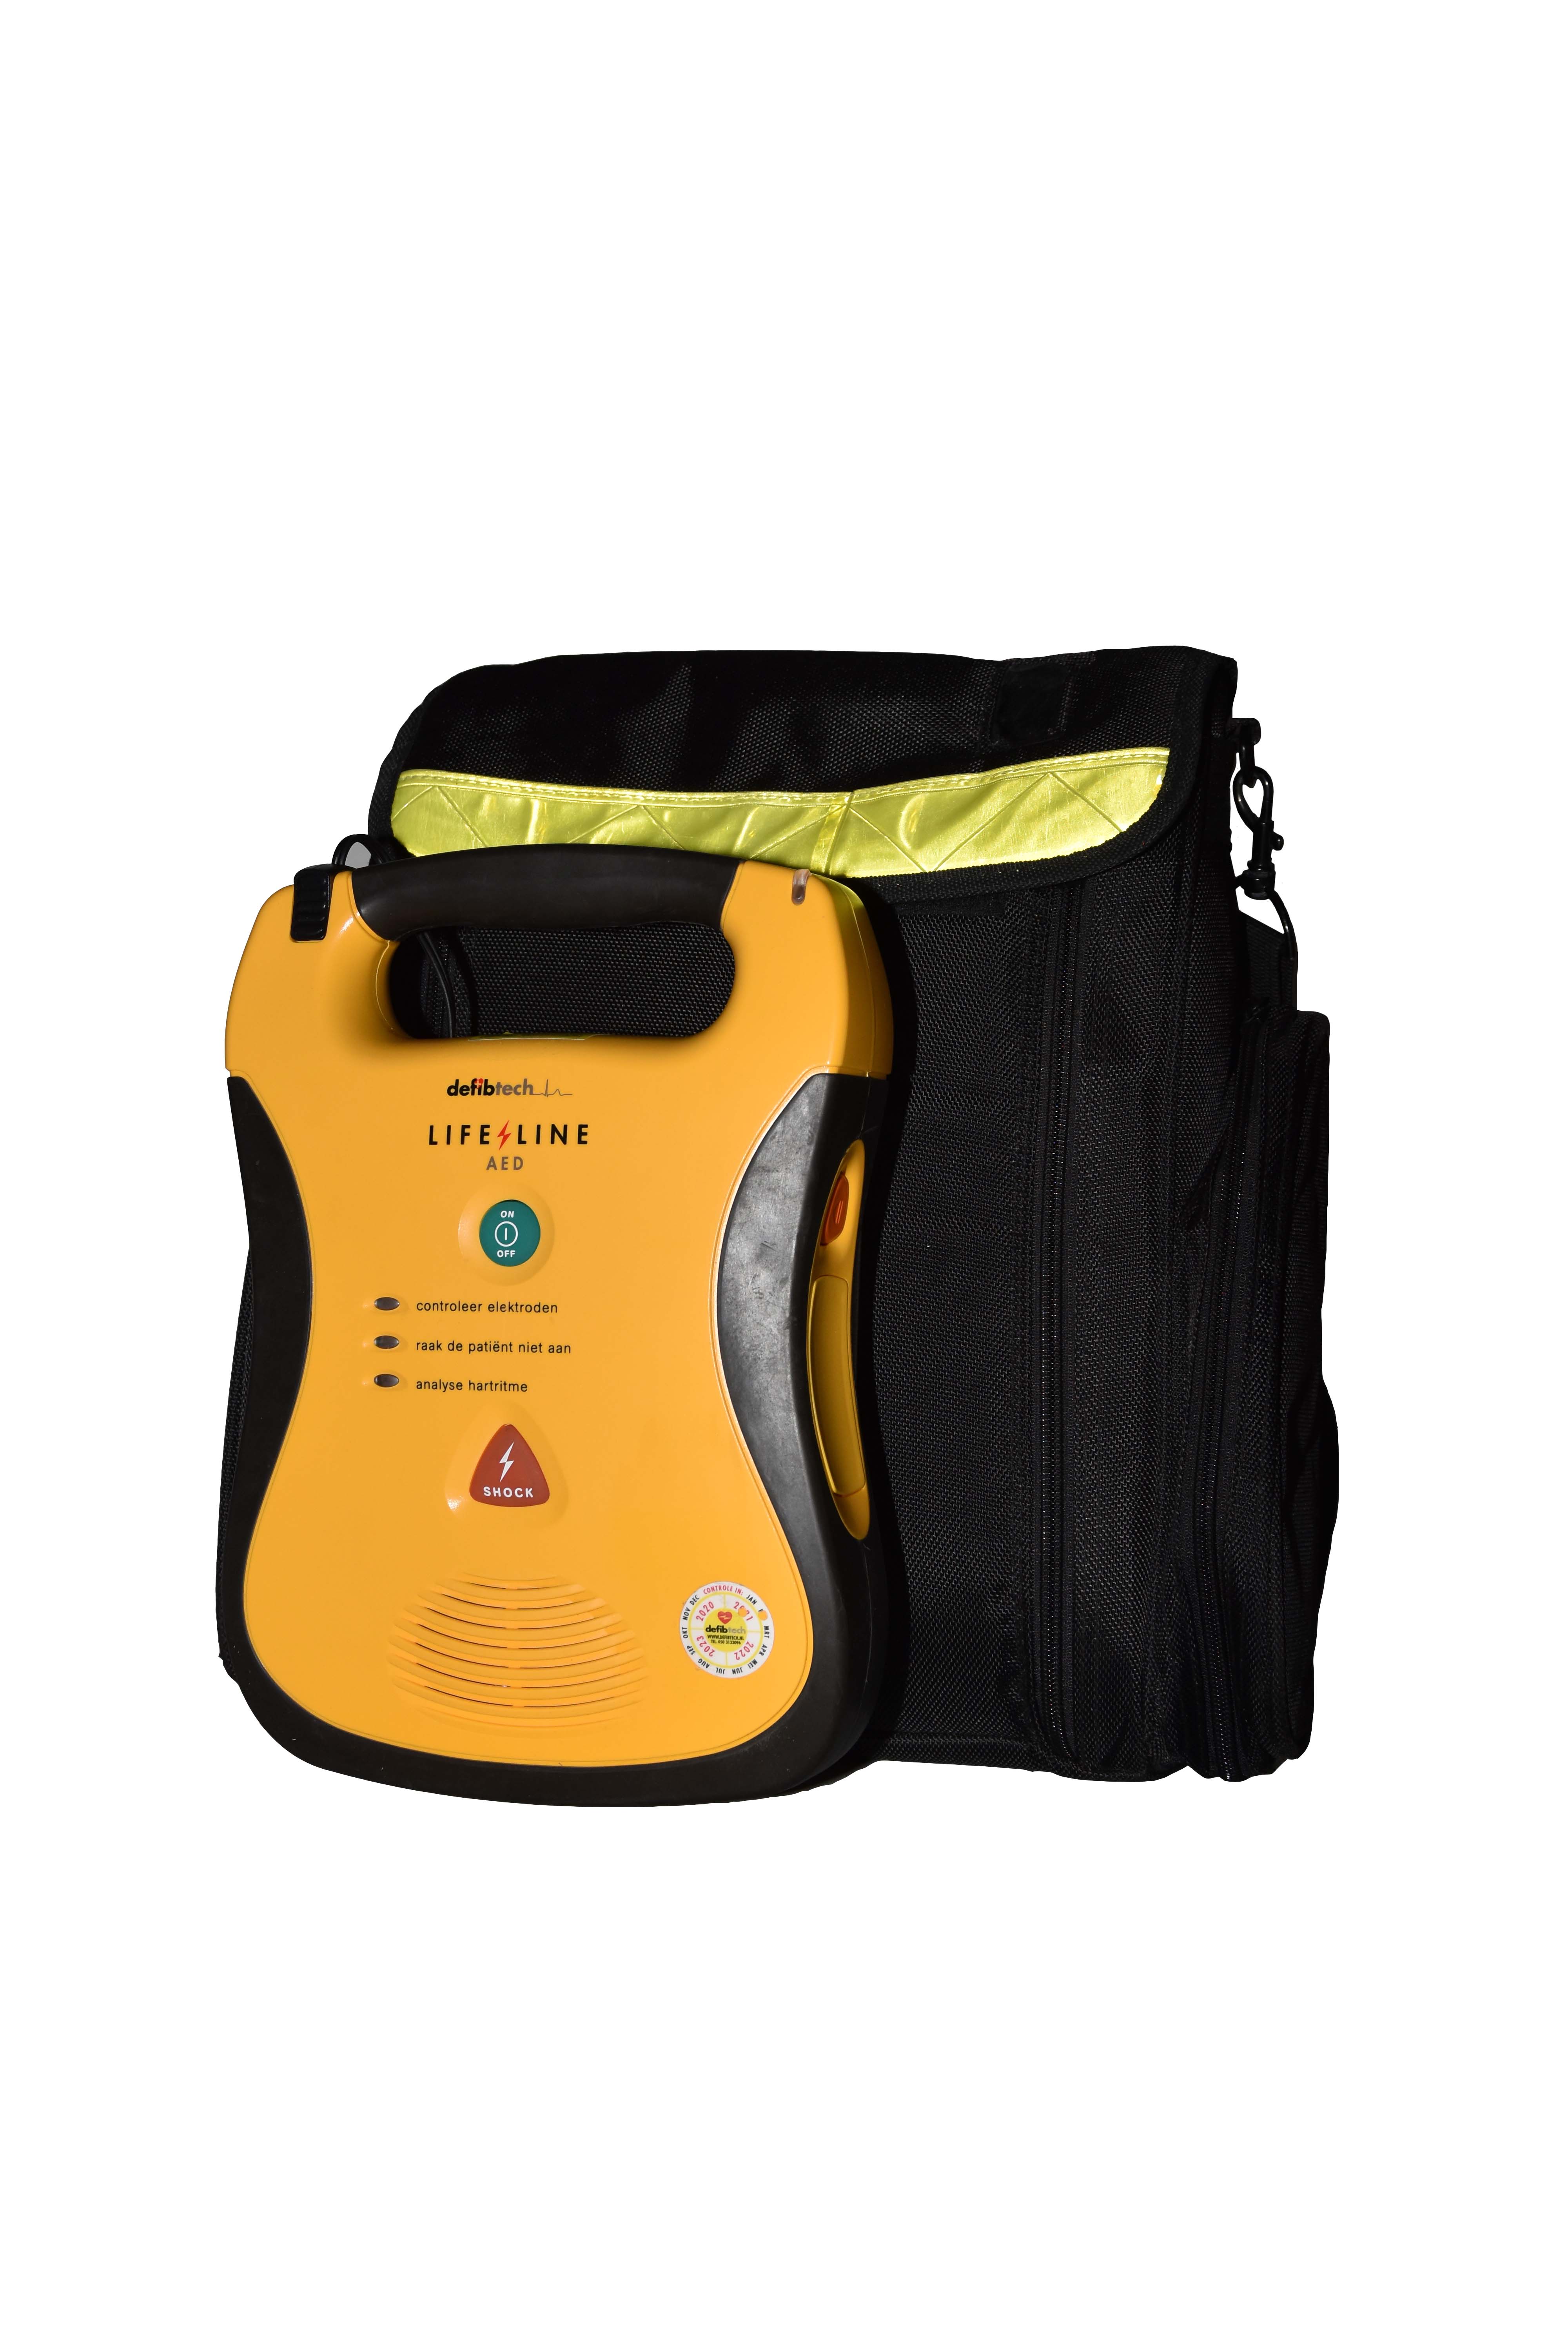 Defibrillator Lifeline pakket 